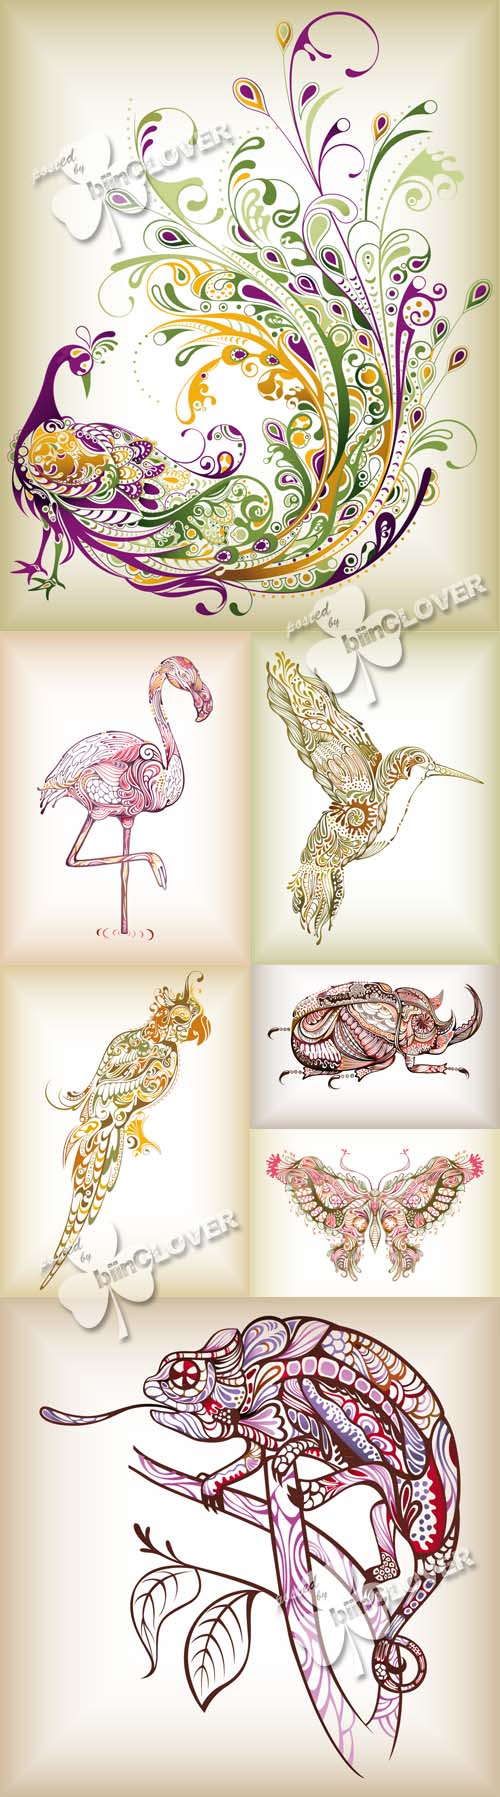 Decorative animals illustrations 0504